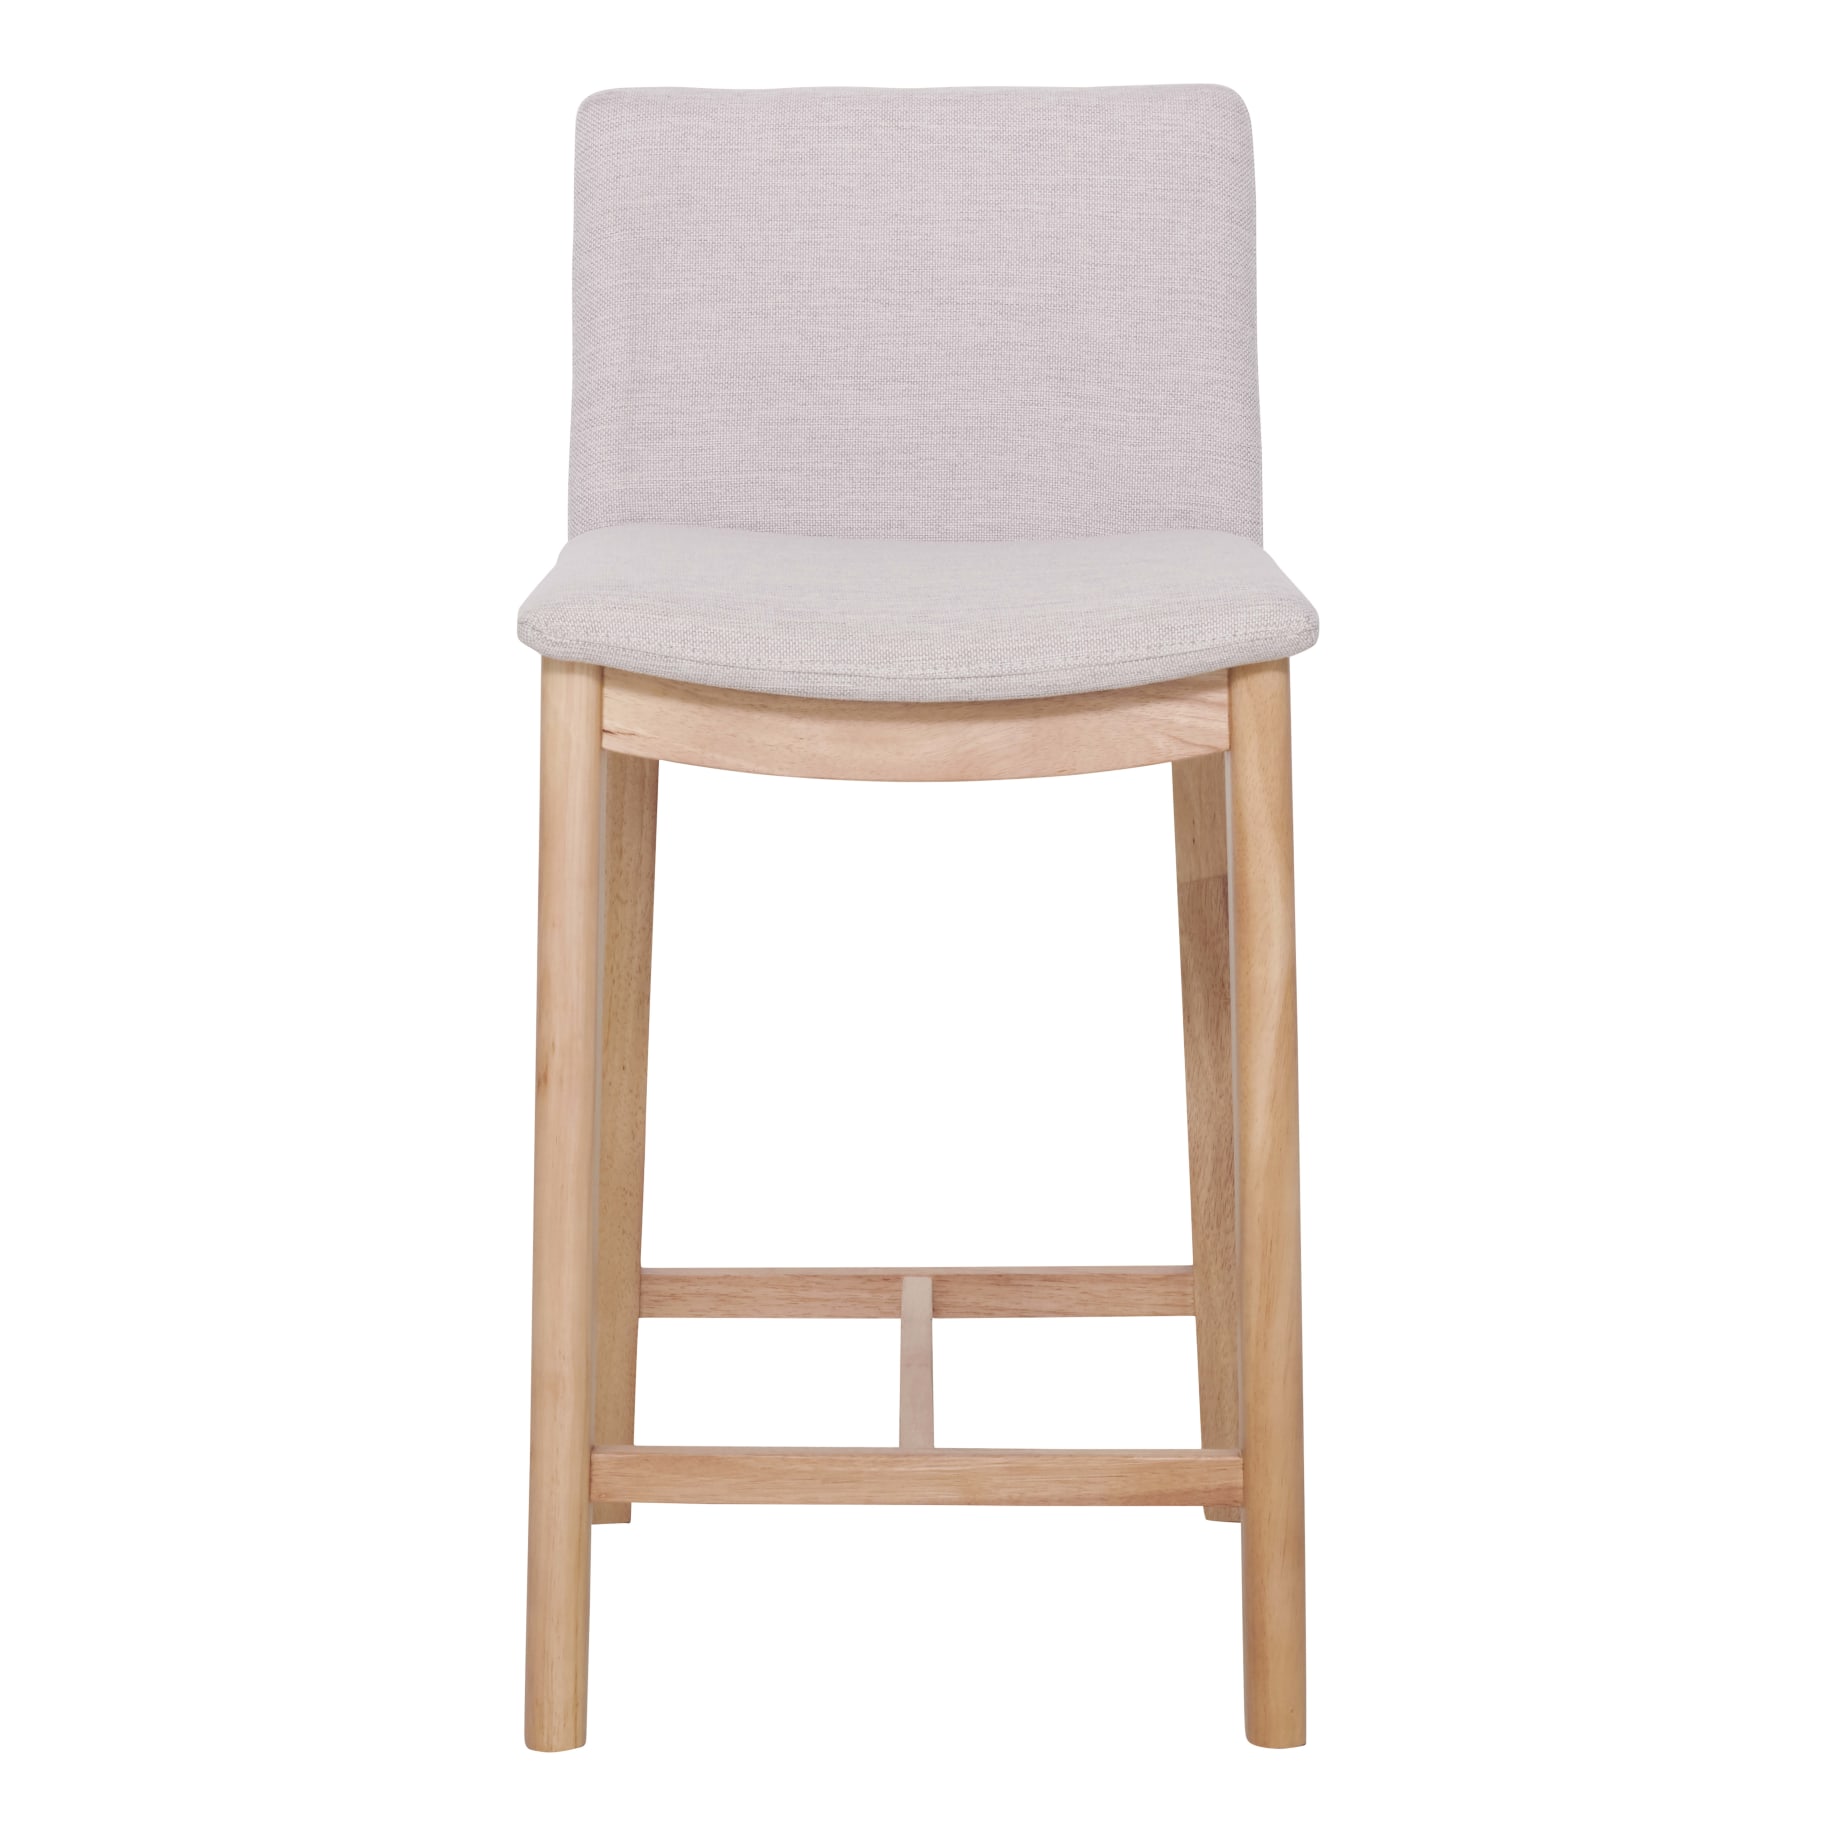 Everest Bar Chair in City Beige Fabric / Oak Stain